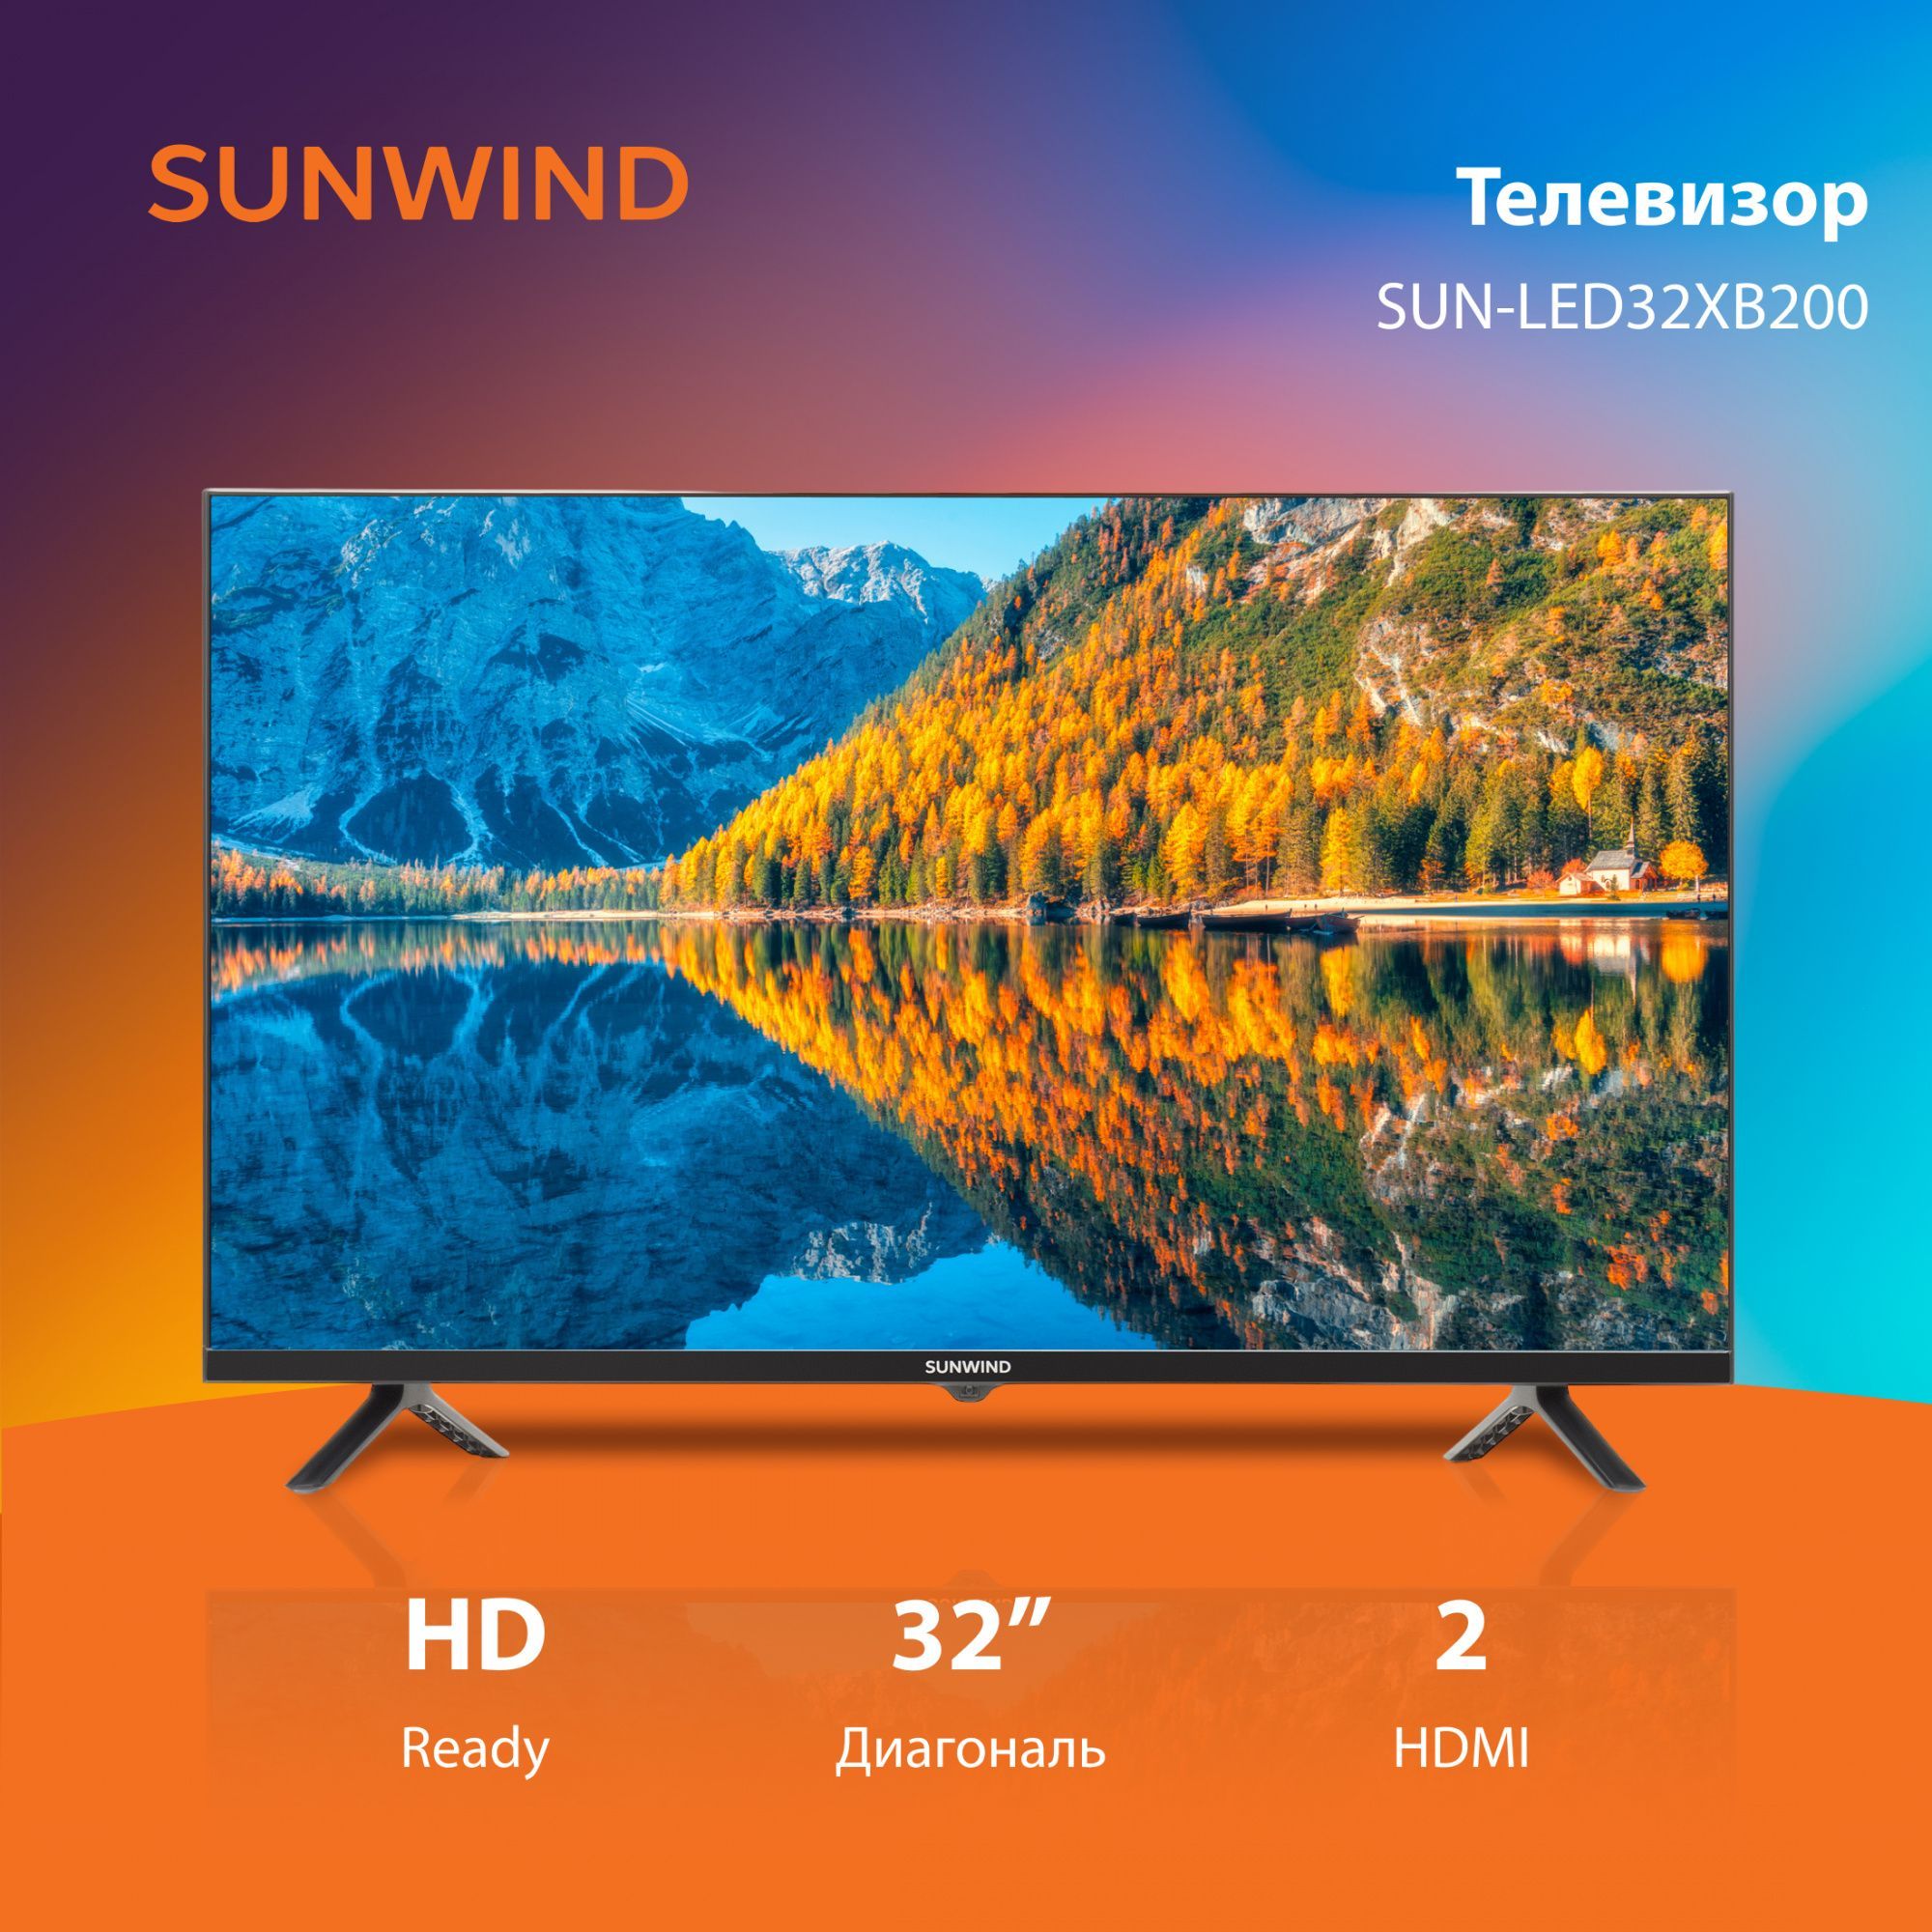 SUNWINDТелевизор32"HD,черный